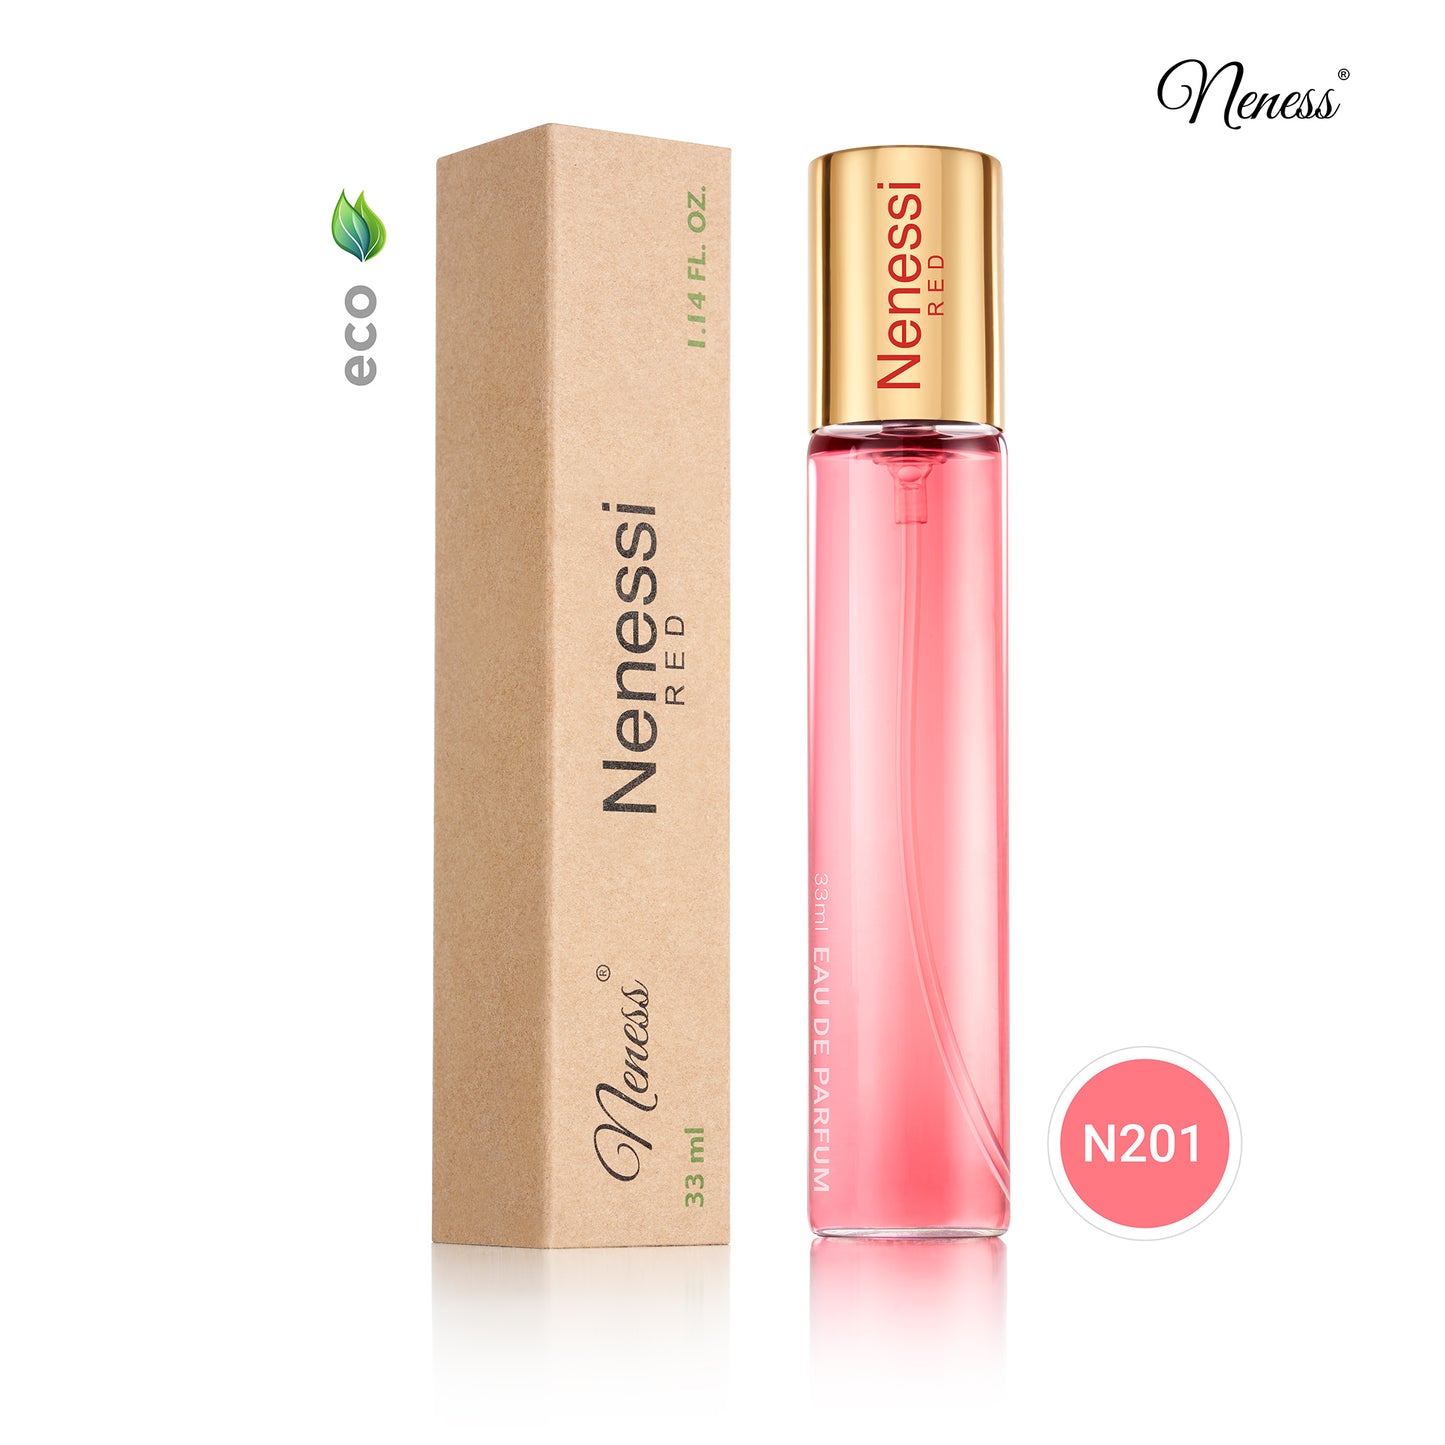 N201. Nenessi RED - 33 ml - Perfume For Women